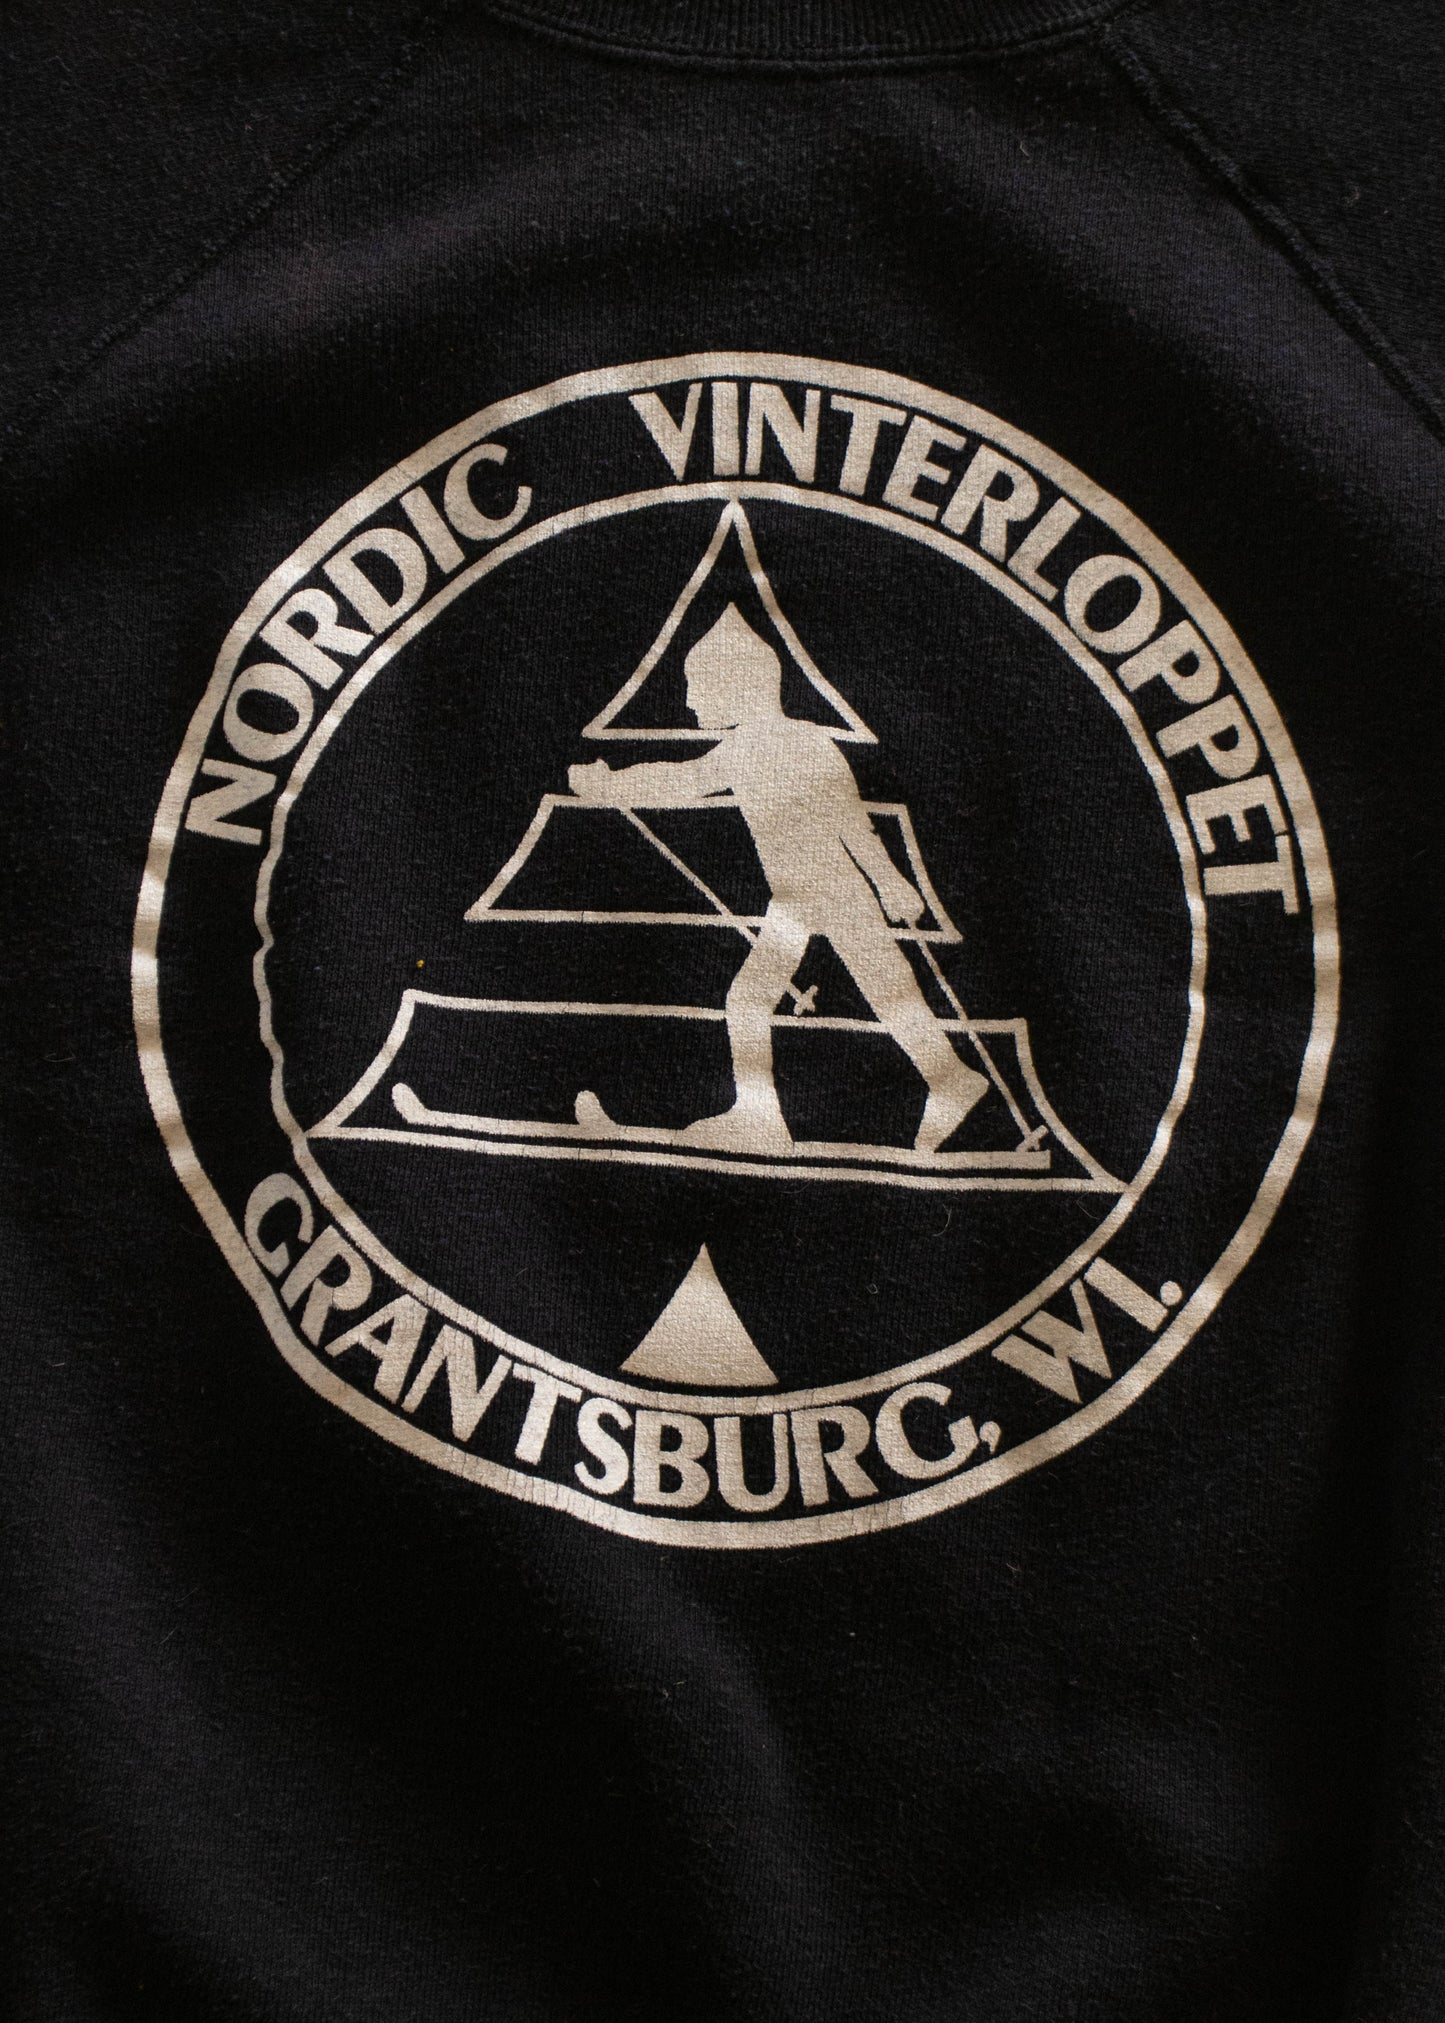 1980s Grantsburg Wisconsin Souvenir Raglan Sweatshirt Size S/M